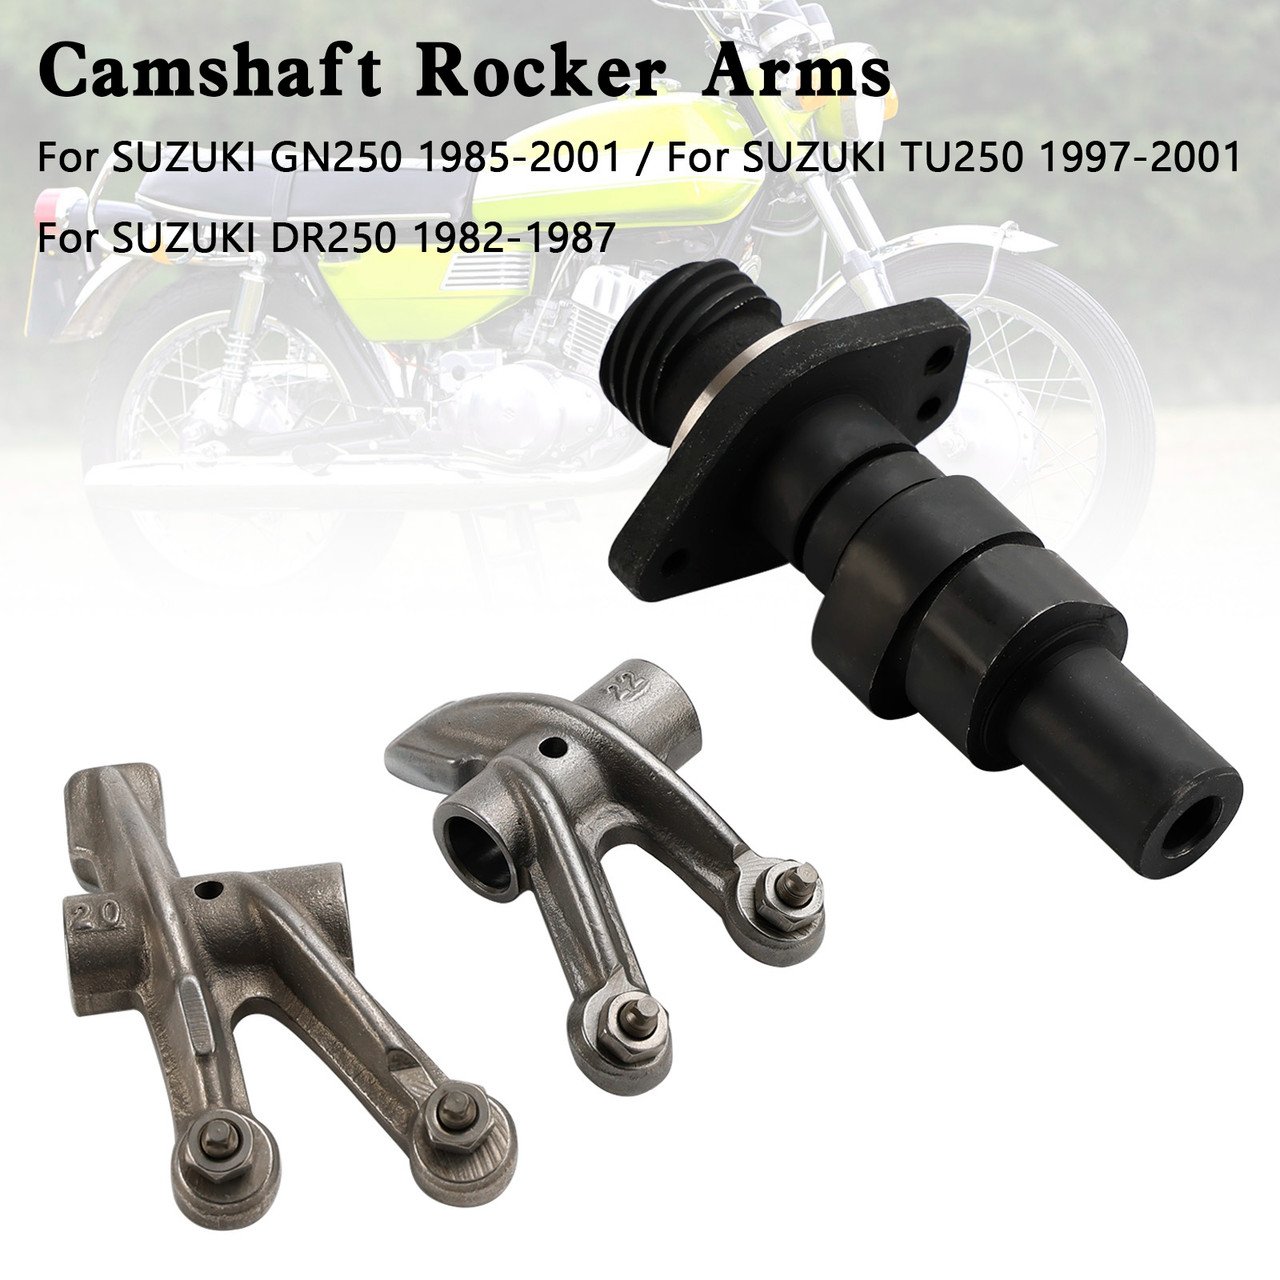 Camshaft Rocker Arms for Suzuki DR250 82-87 GN250 85-01 TU250 1997-2001